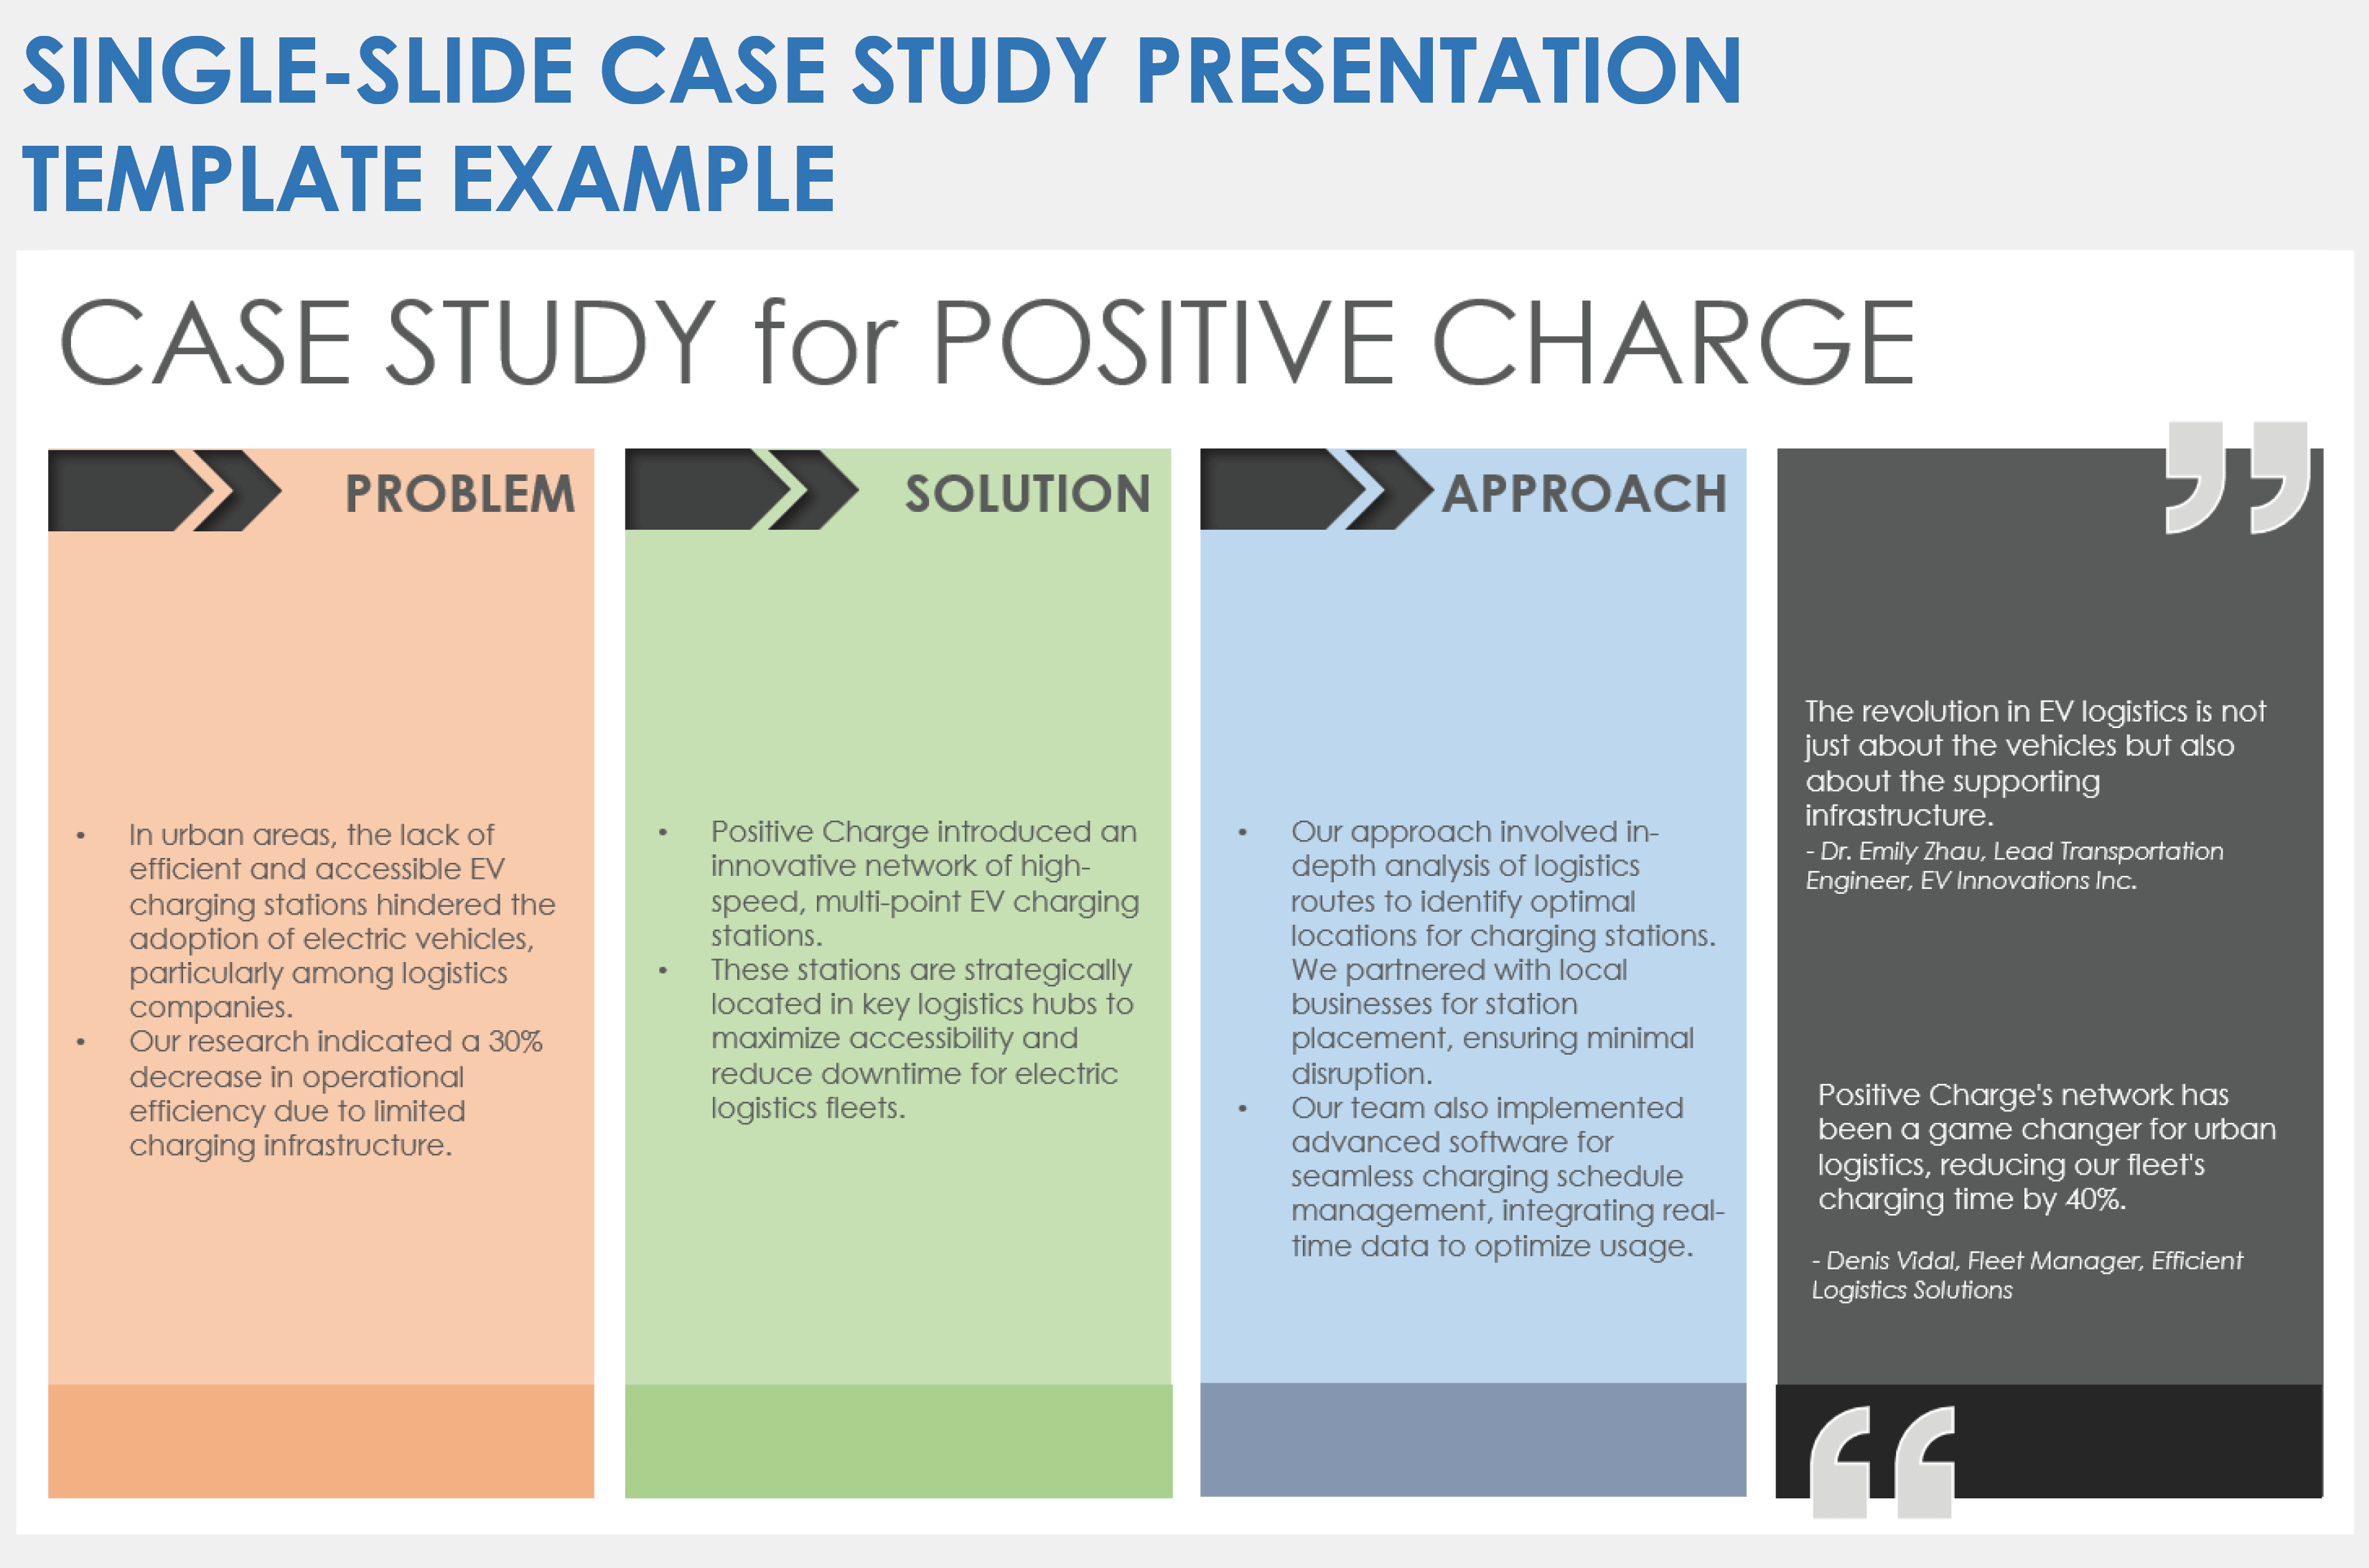 Single-Slide Case Study Presentation Example Template